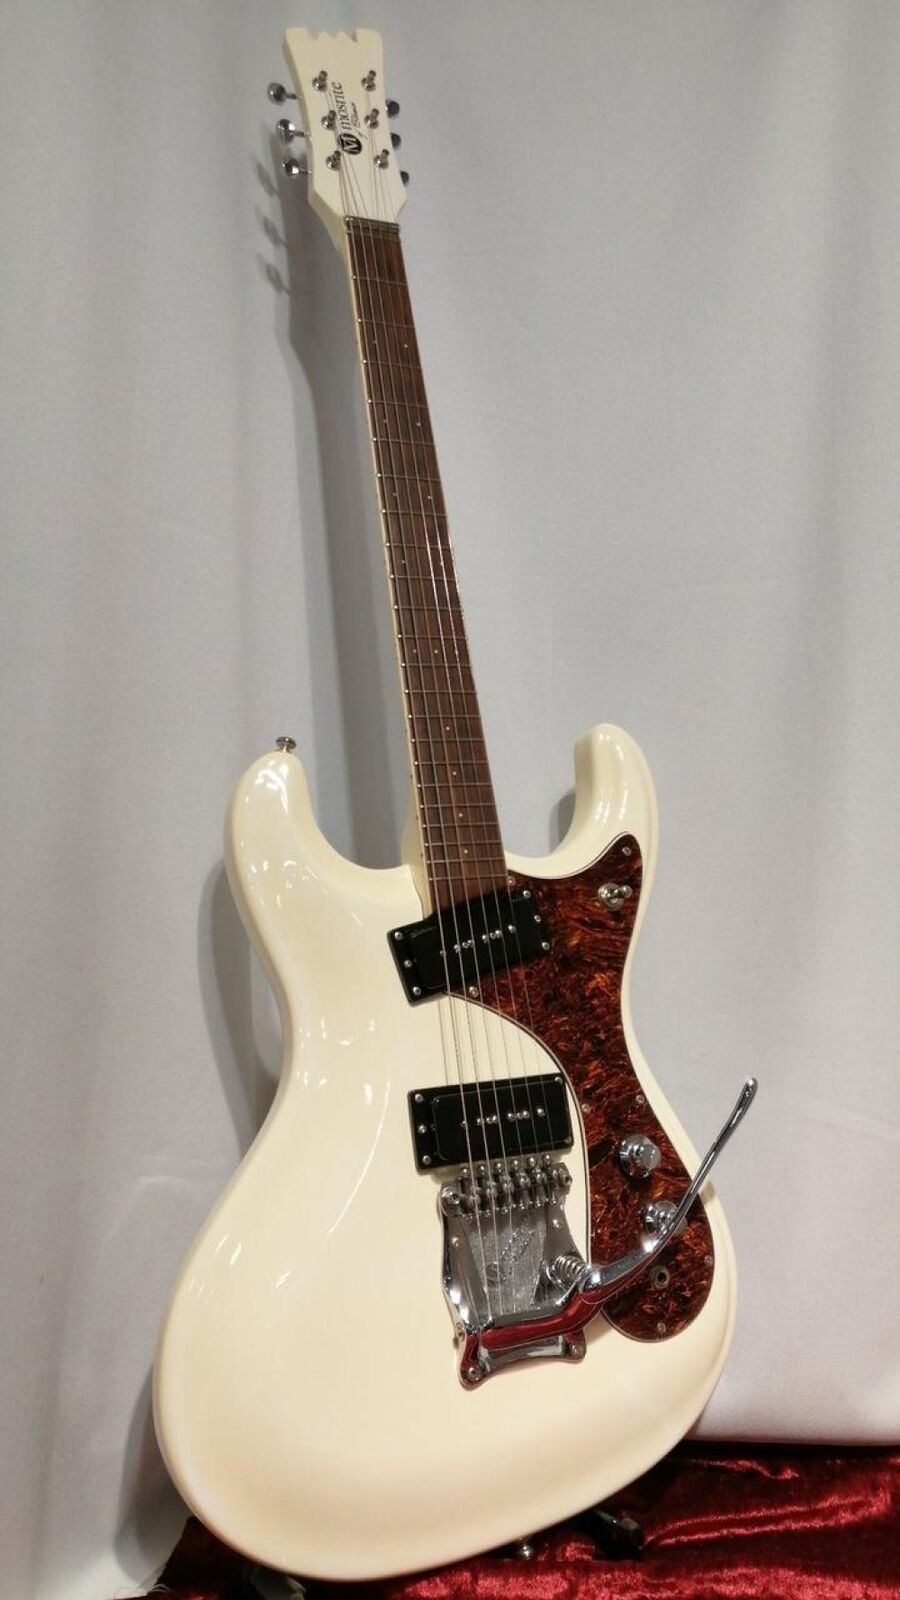 MOSRITE OF CLASSICS 65 MODEL Electric Guitar Used classics electric guitar model mosrite used 